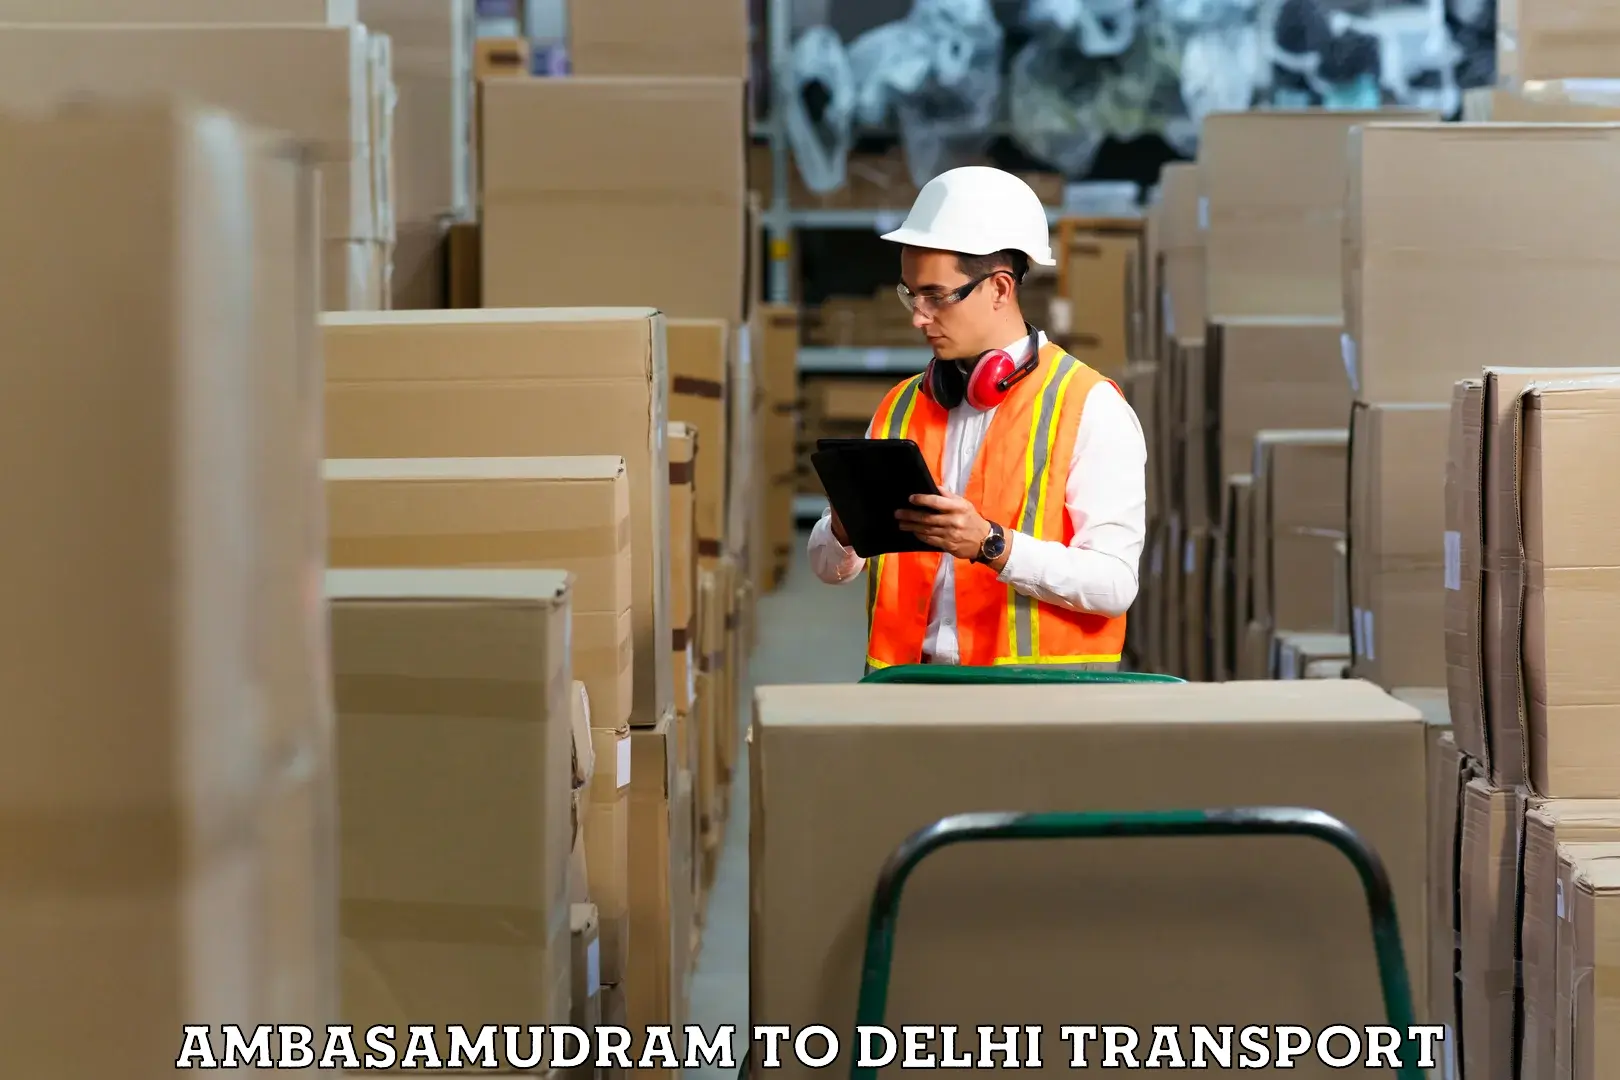 Bike shipping service Ambasamudram to Delhi